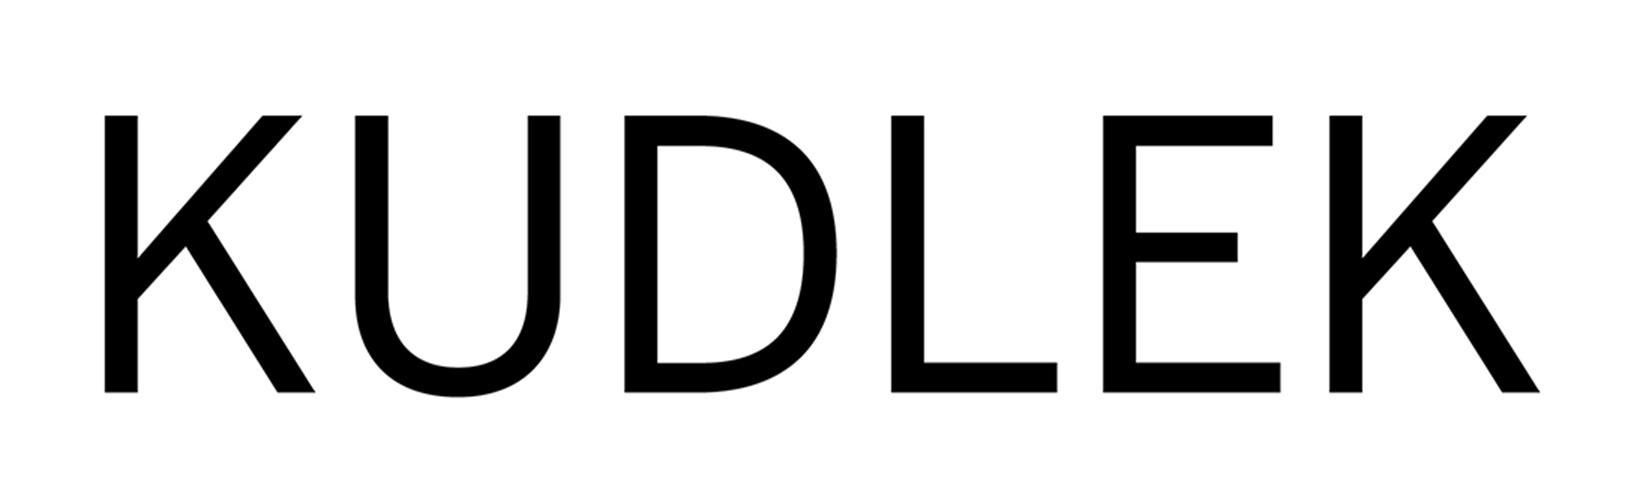 Logo_Galerie